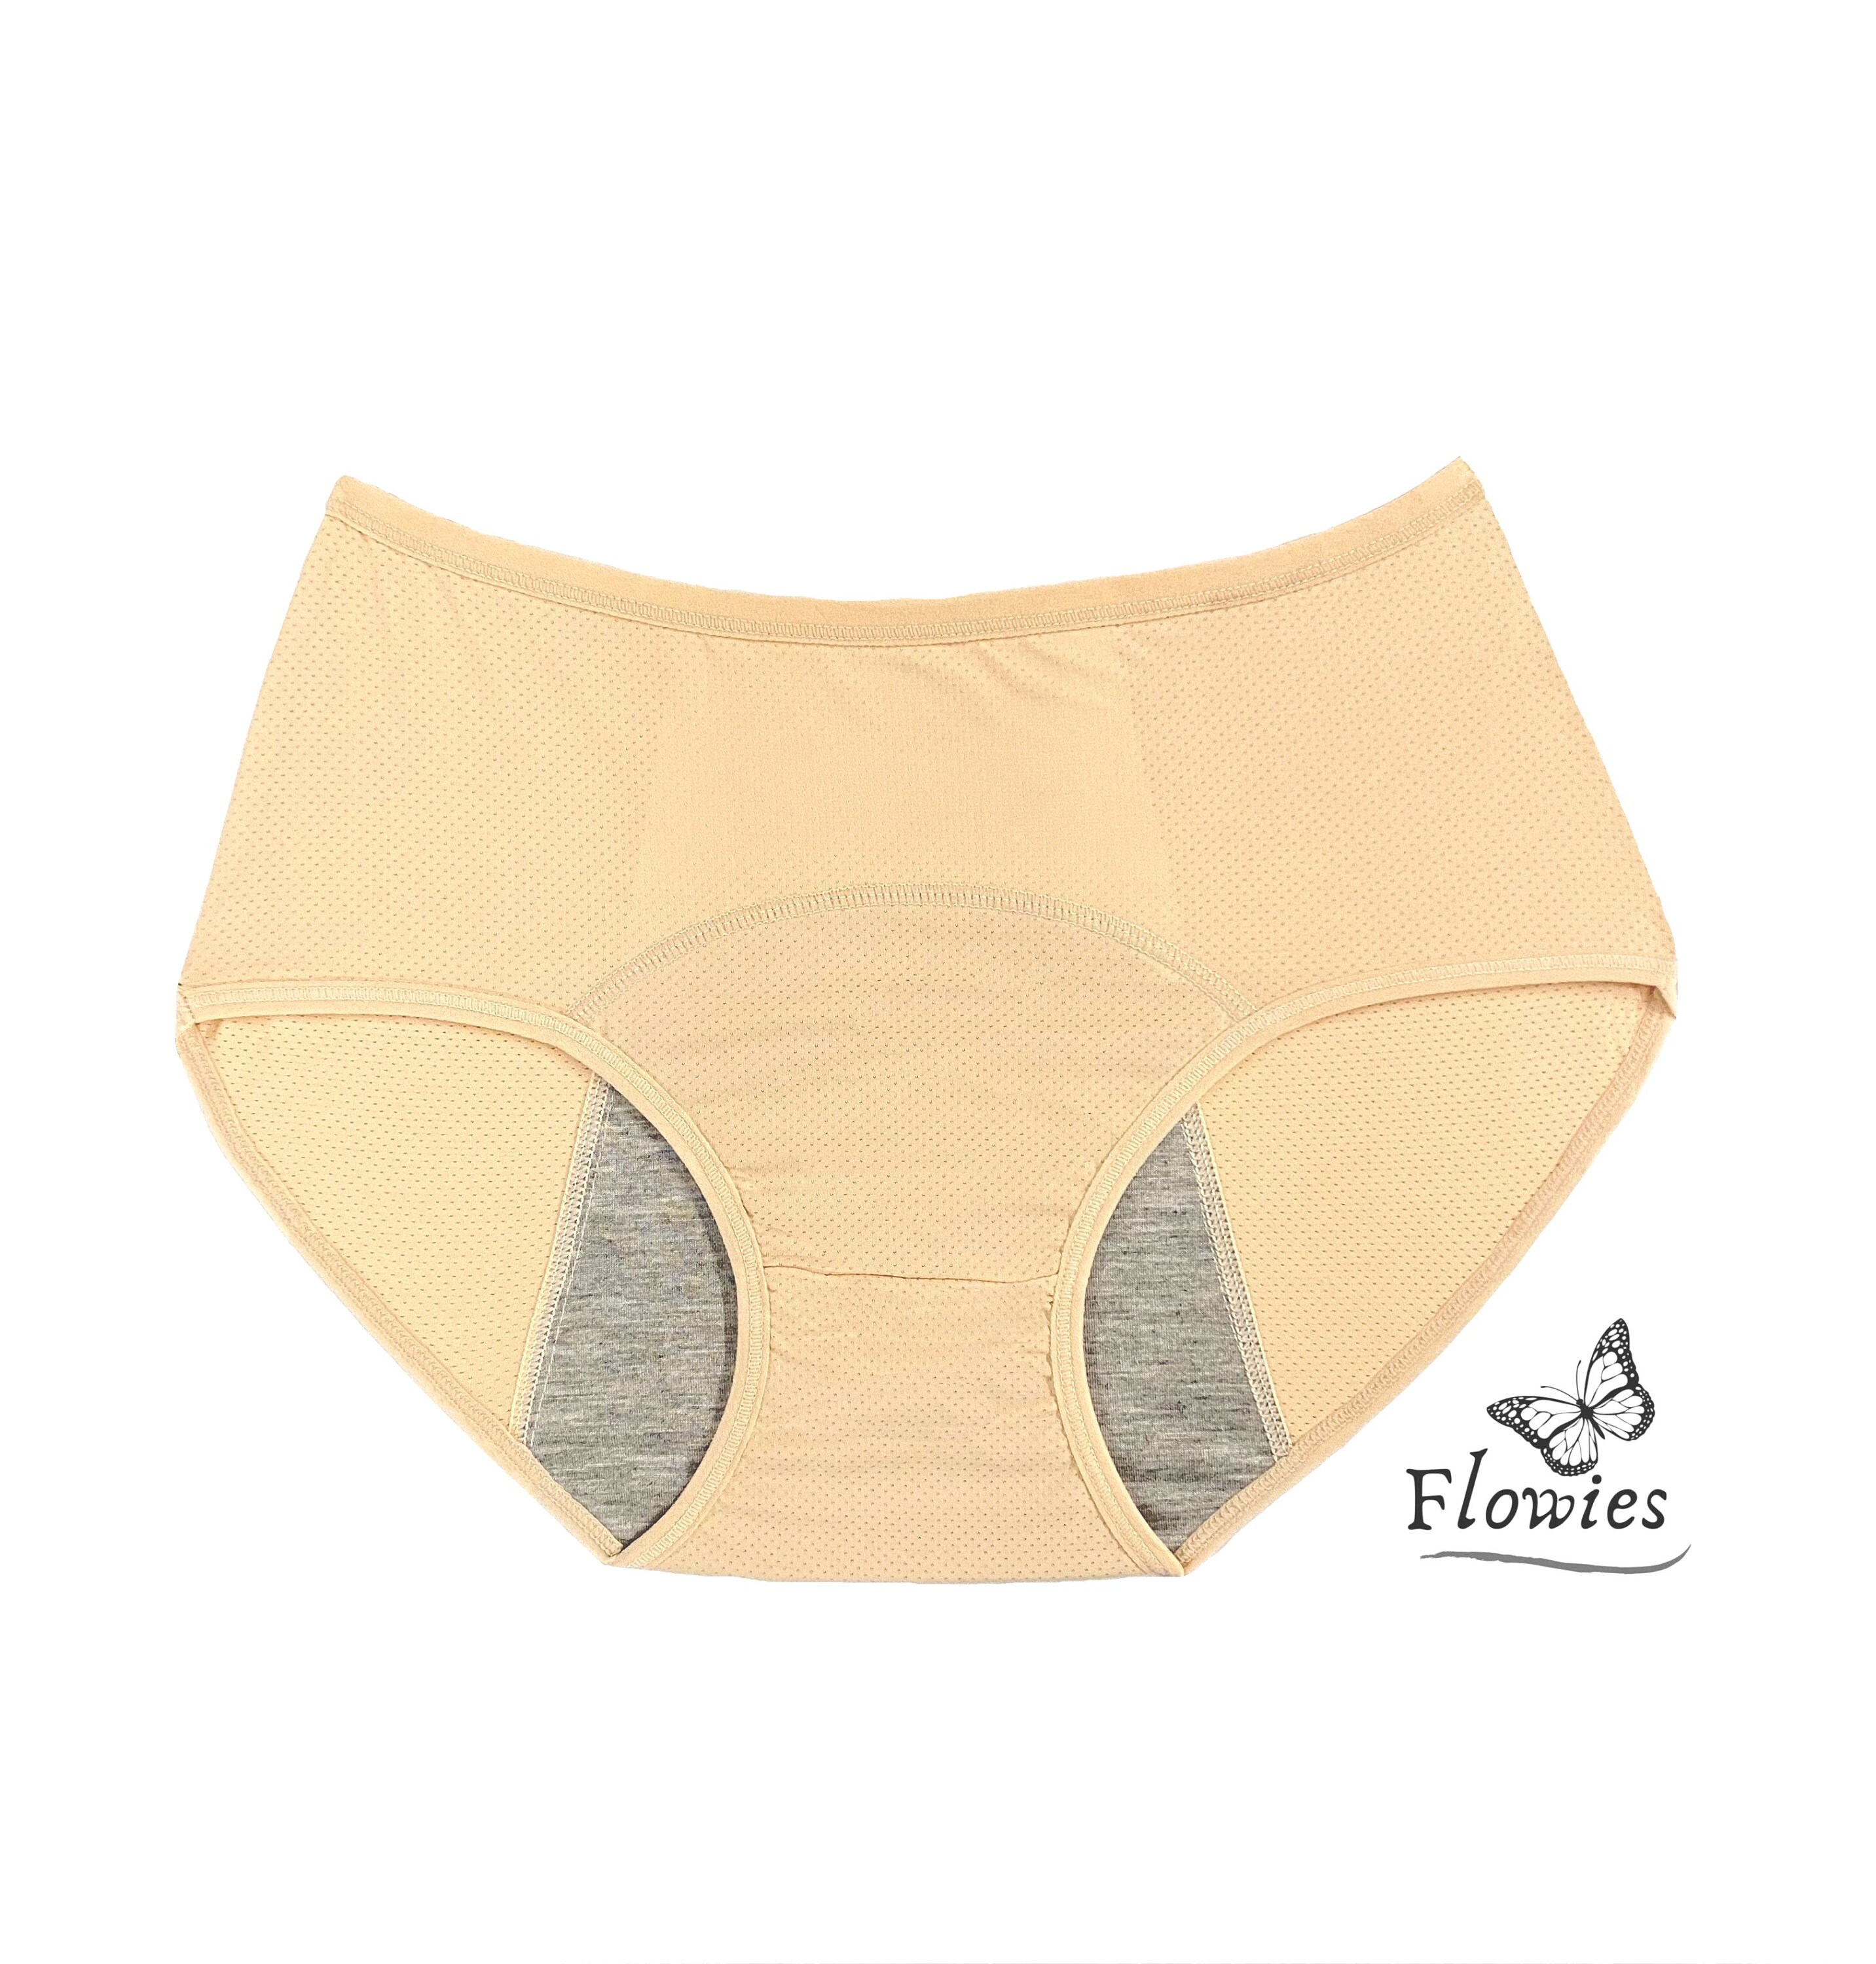 Flowies 3 PACK Lace Period Panties Period Underwear Bladder Leakage Panty  Leakproof Culotte Menstruelle Eco Friendly Product -  Hong Kong